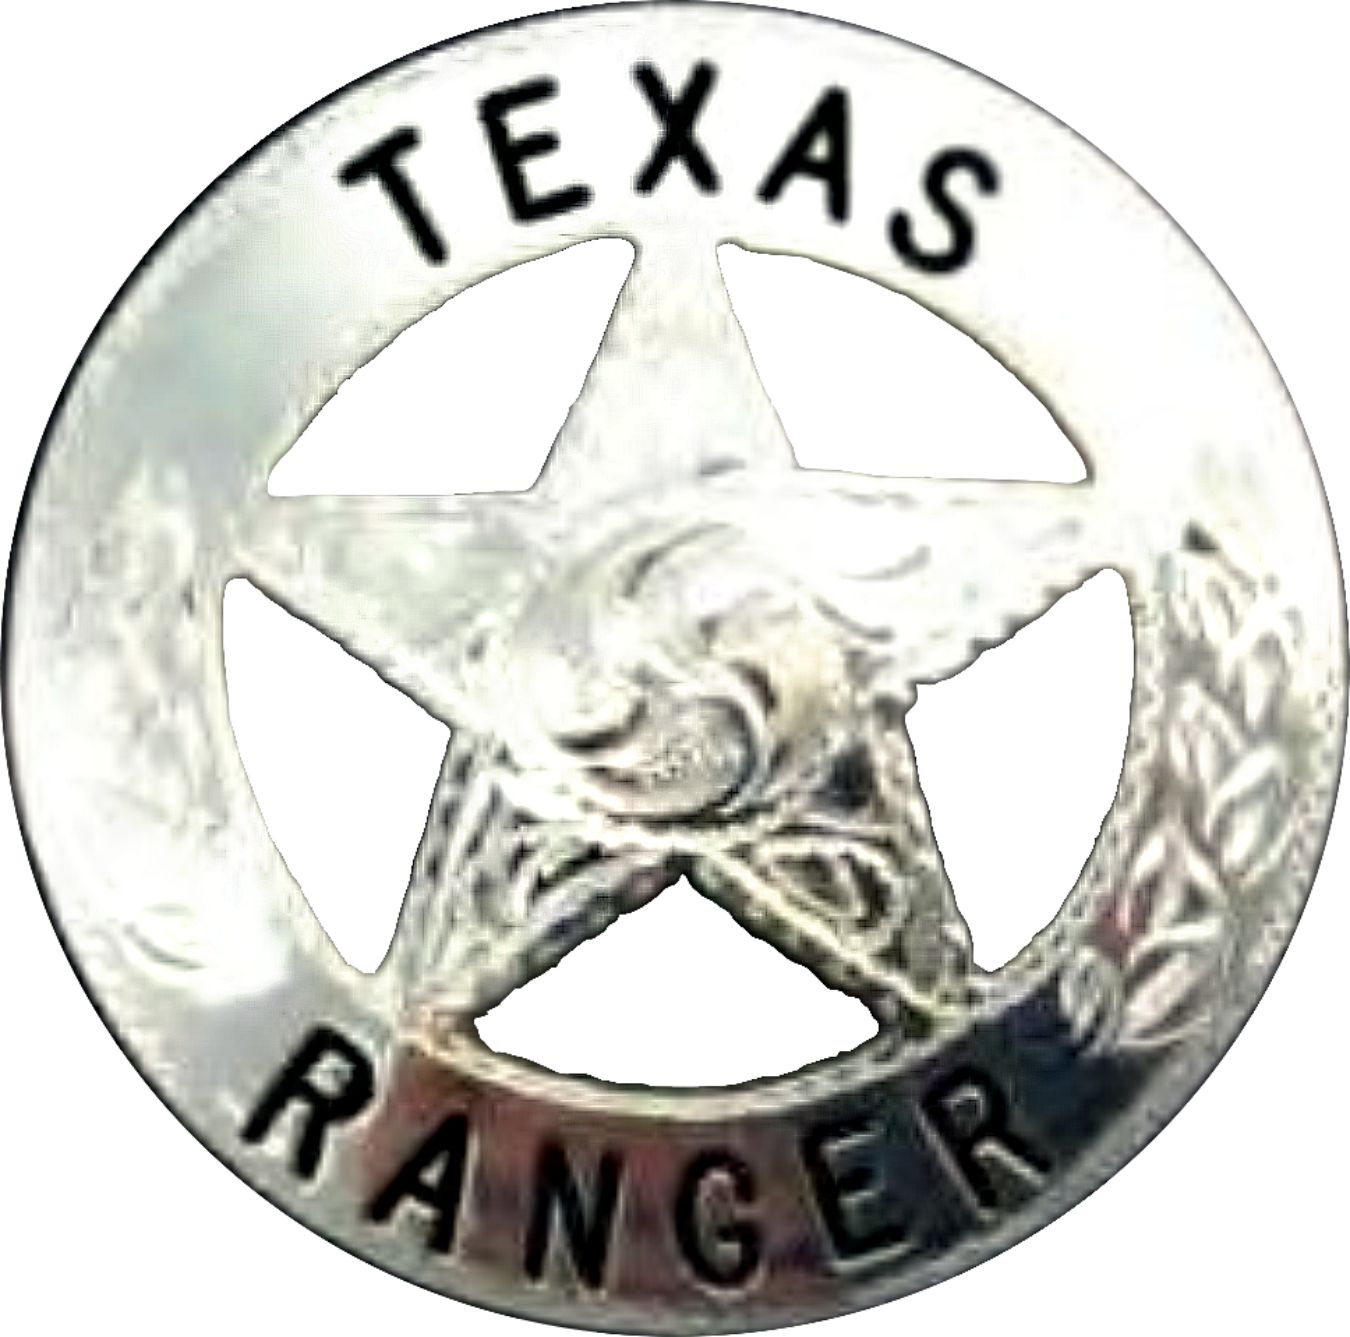 Texas Rangers badge 2